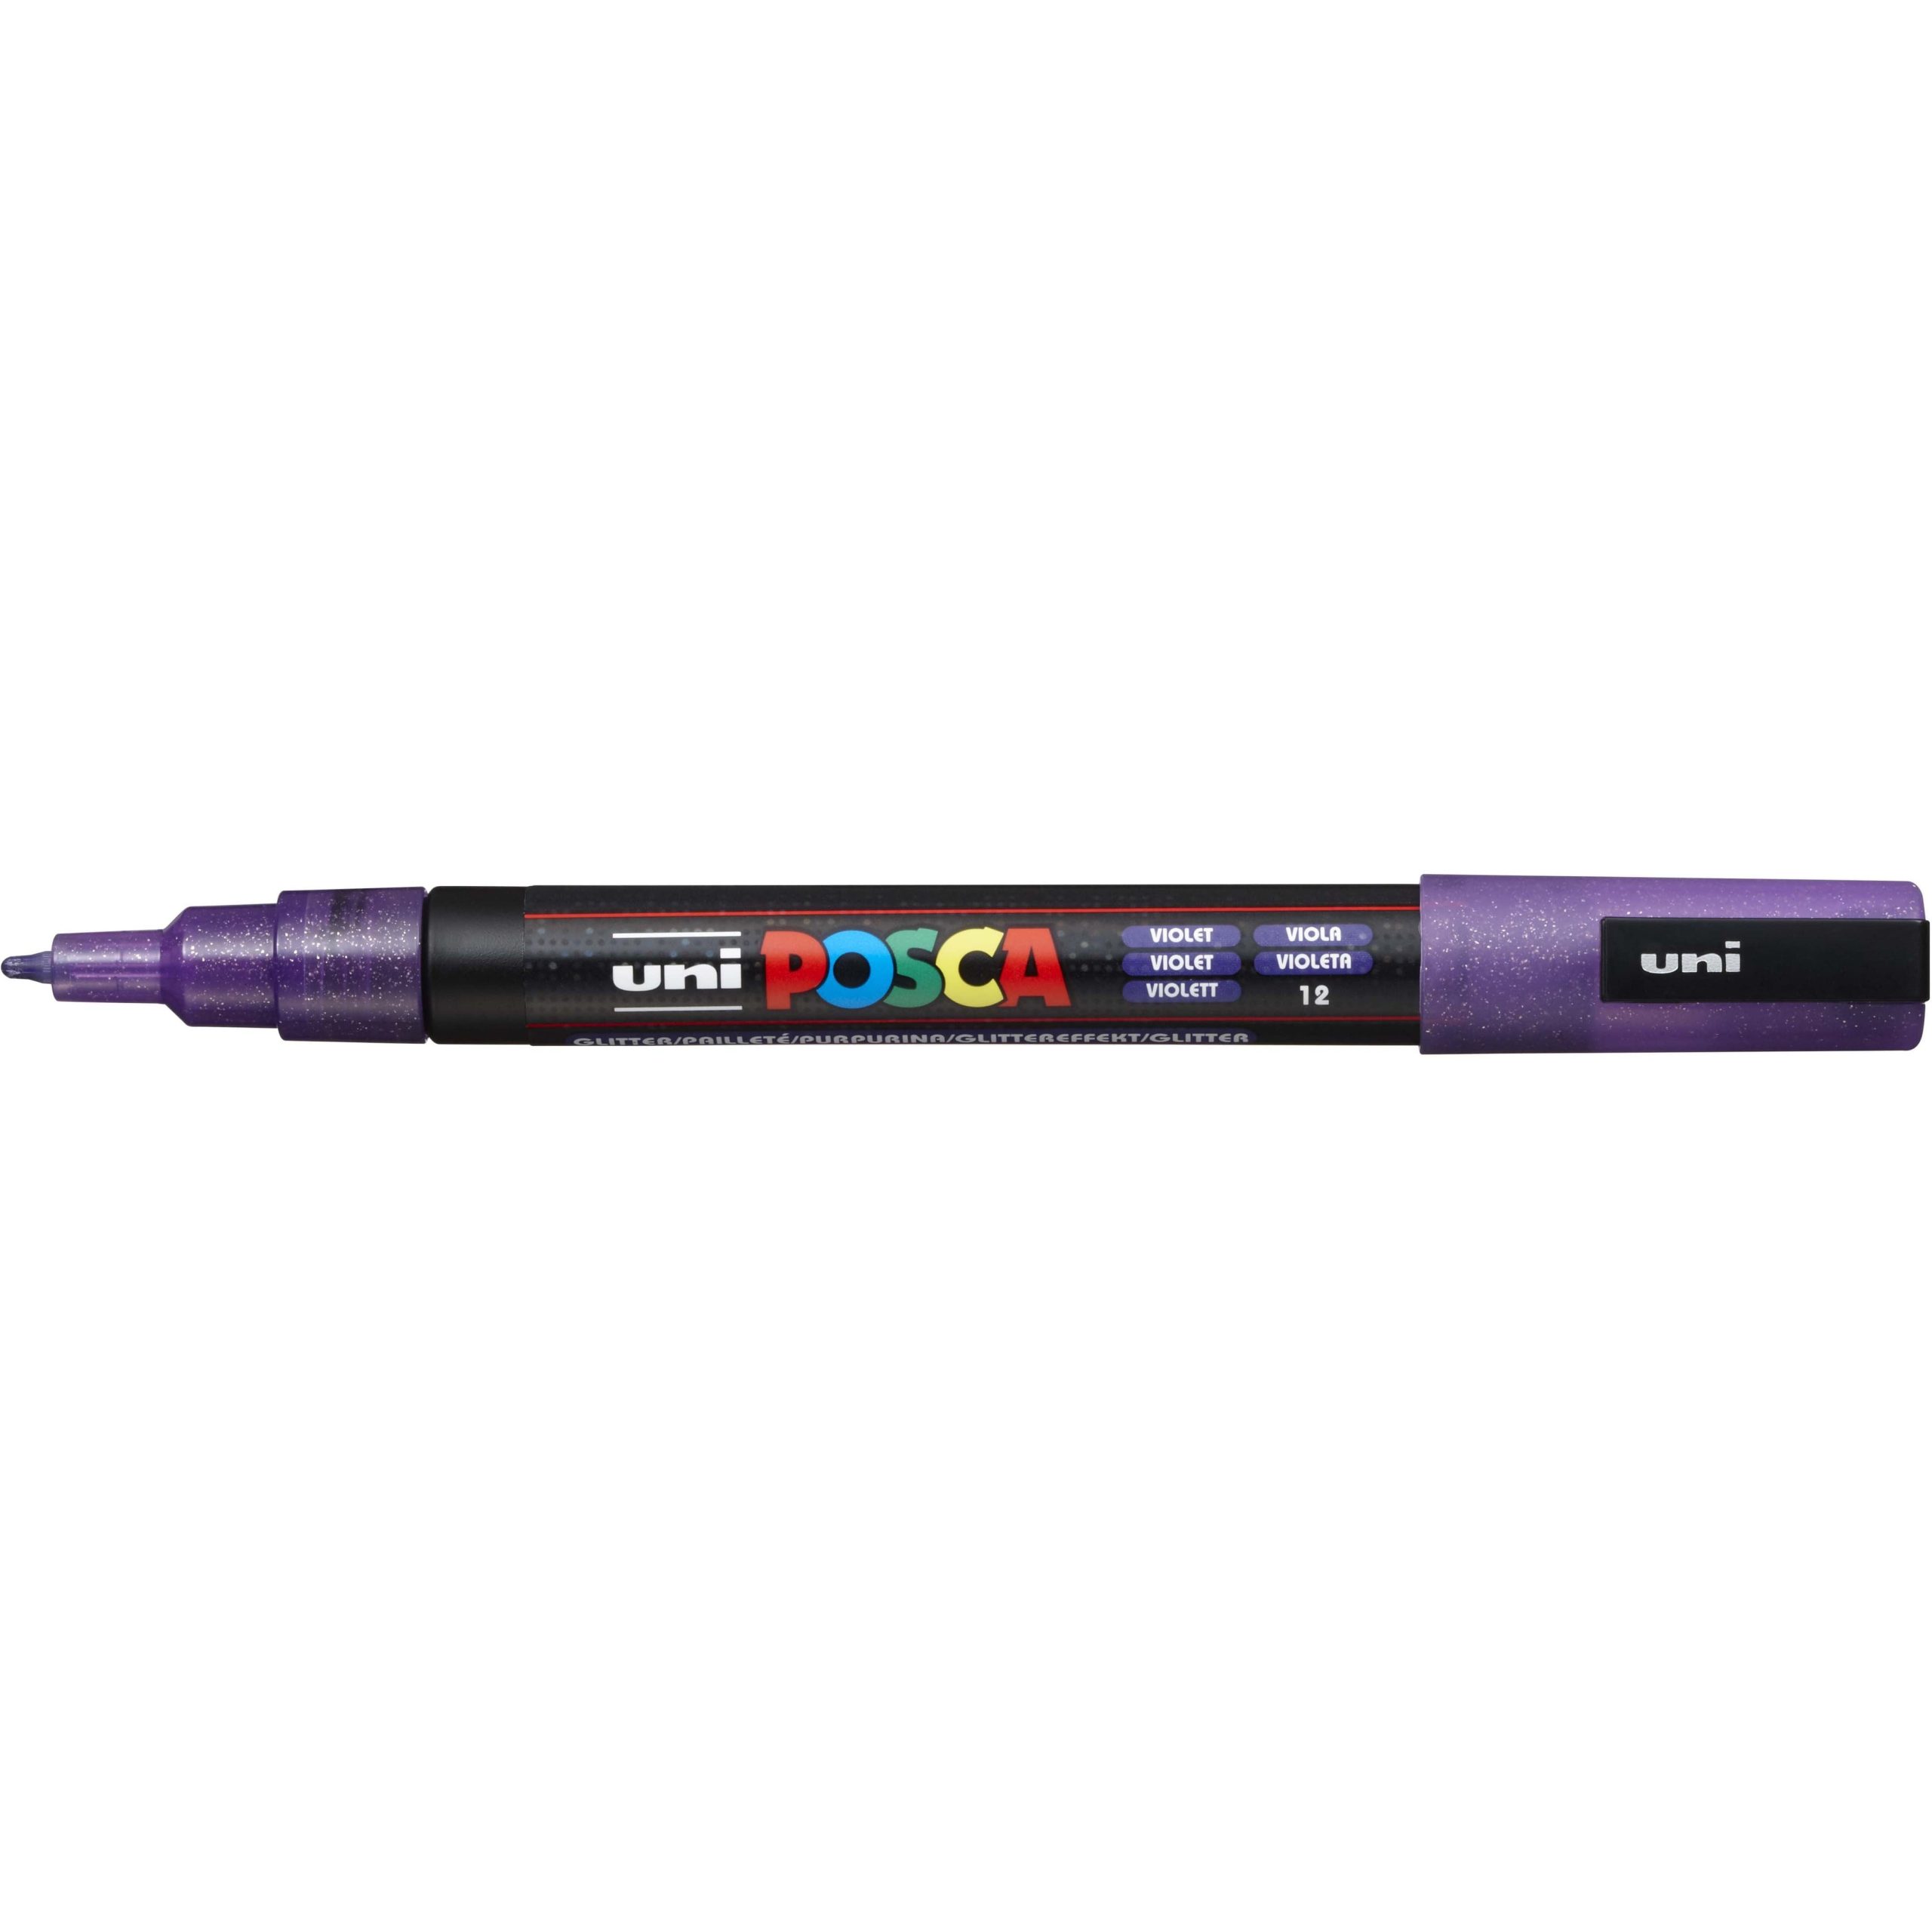 Uni POSCA PC-3ML Glitter Paint Marker Art Pen - All Colours - Buy 4 Pay for  3